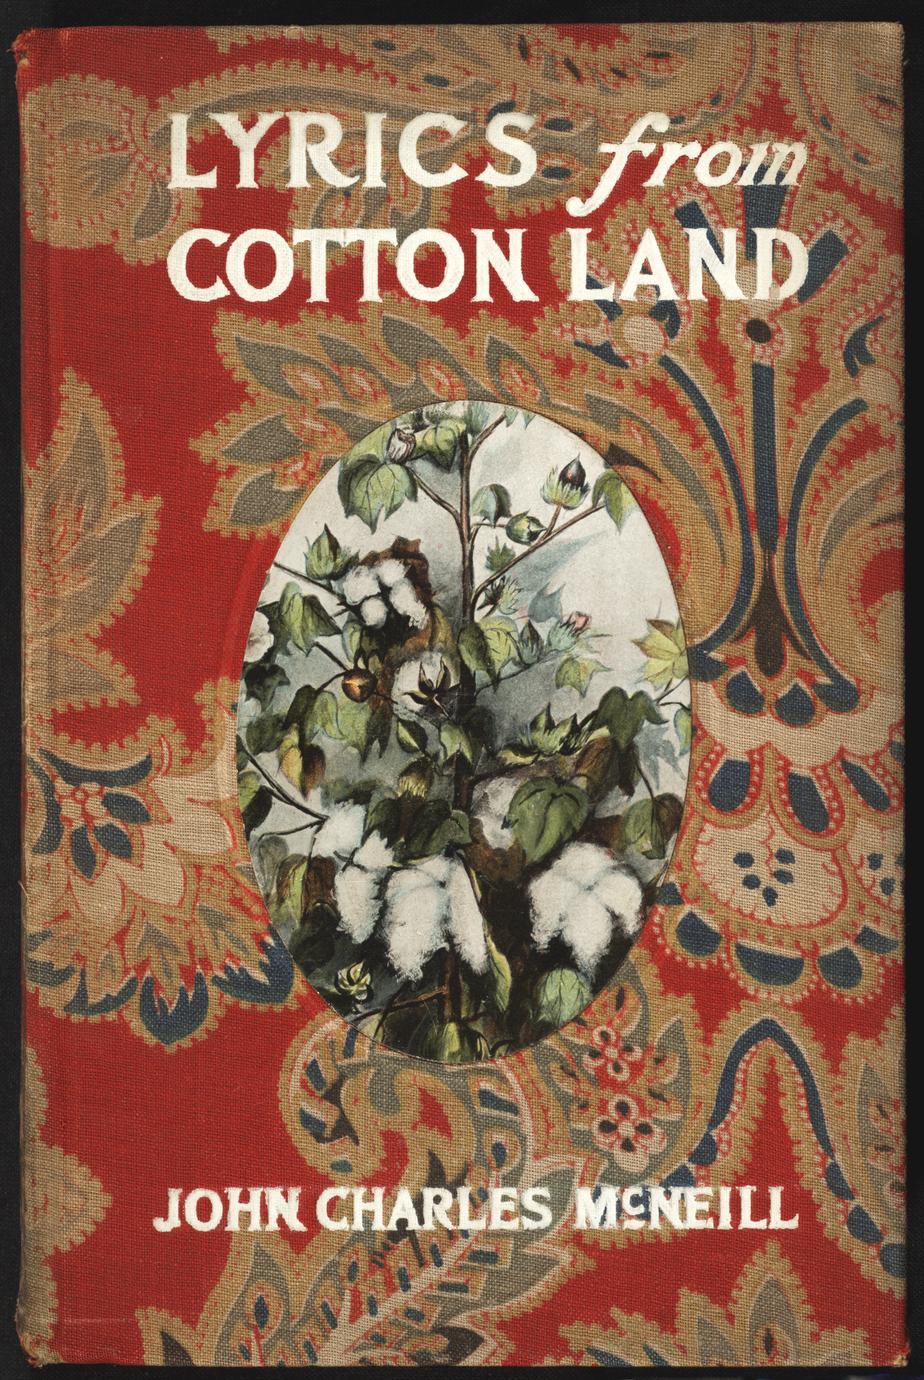 Lyrics from cotton land (1 of 2)